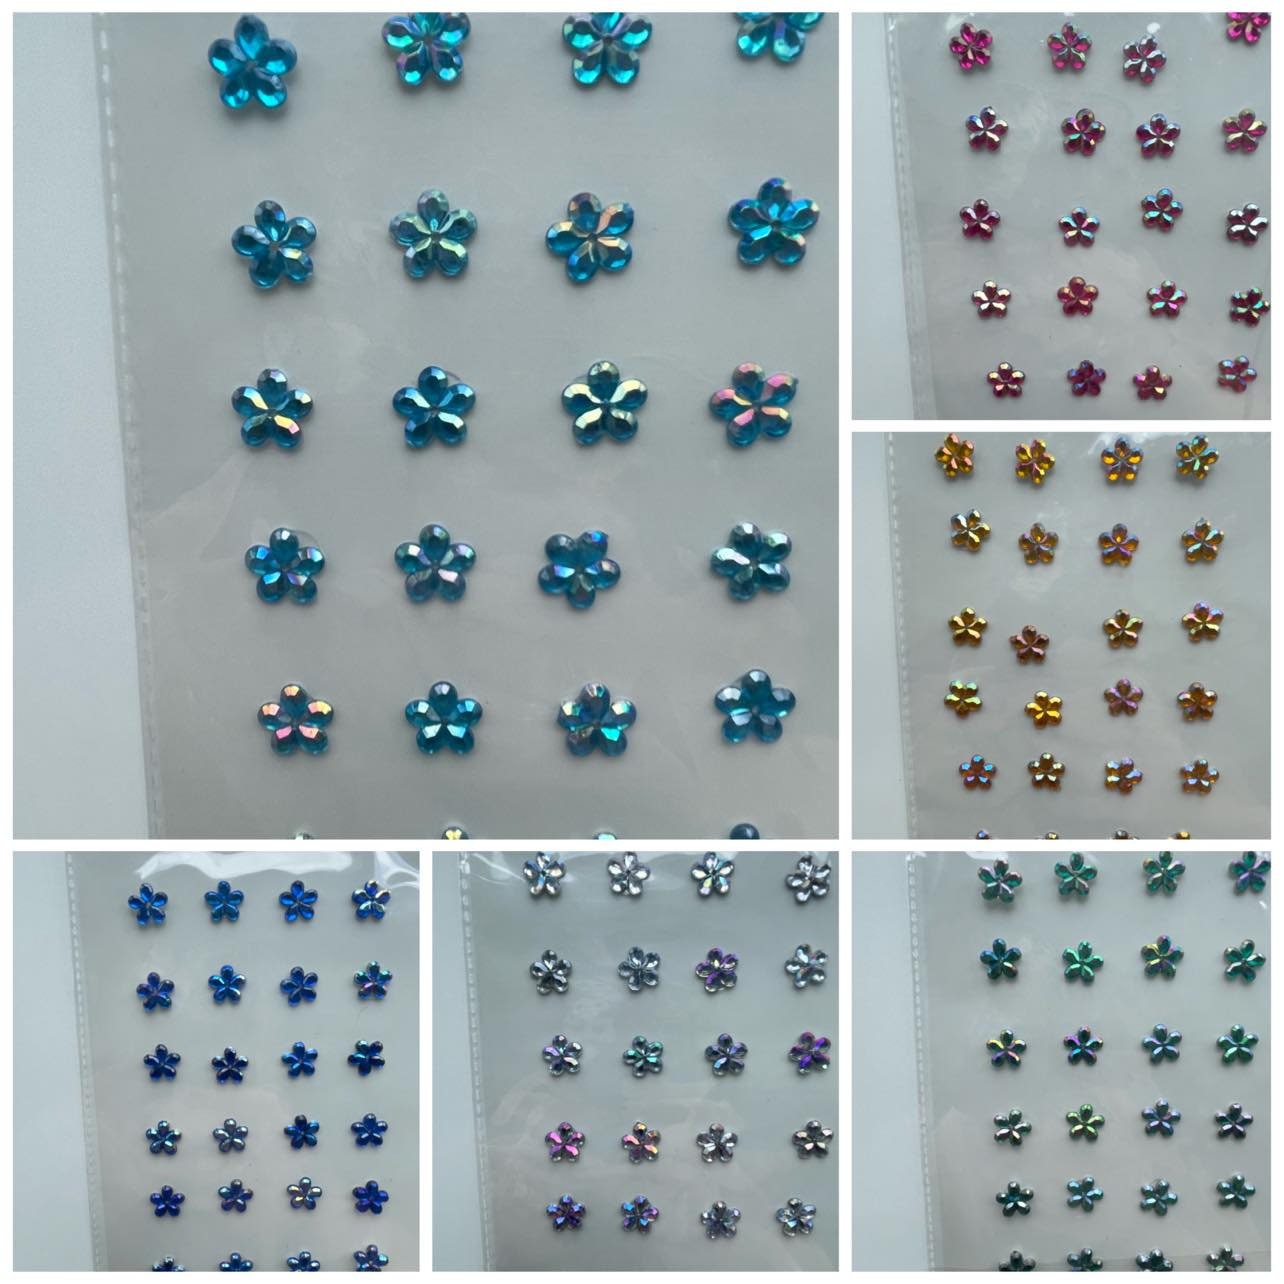 Adhesive Gems. Rainbow Gems. Peel n Stick Gems for Craft, Mixed Media,  Embellishment, Card Making